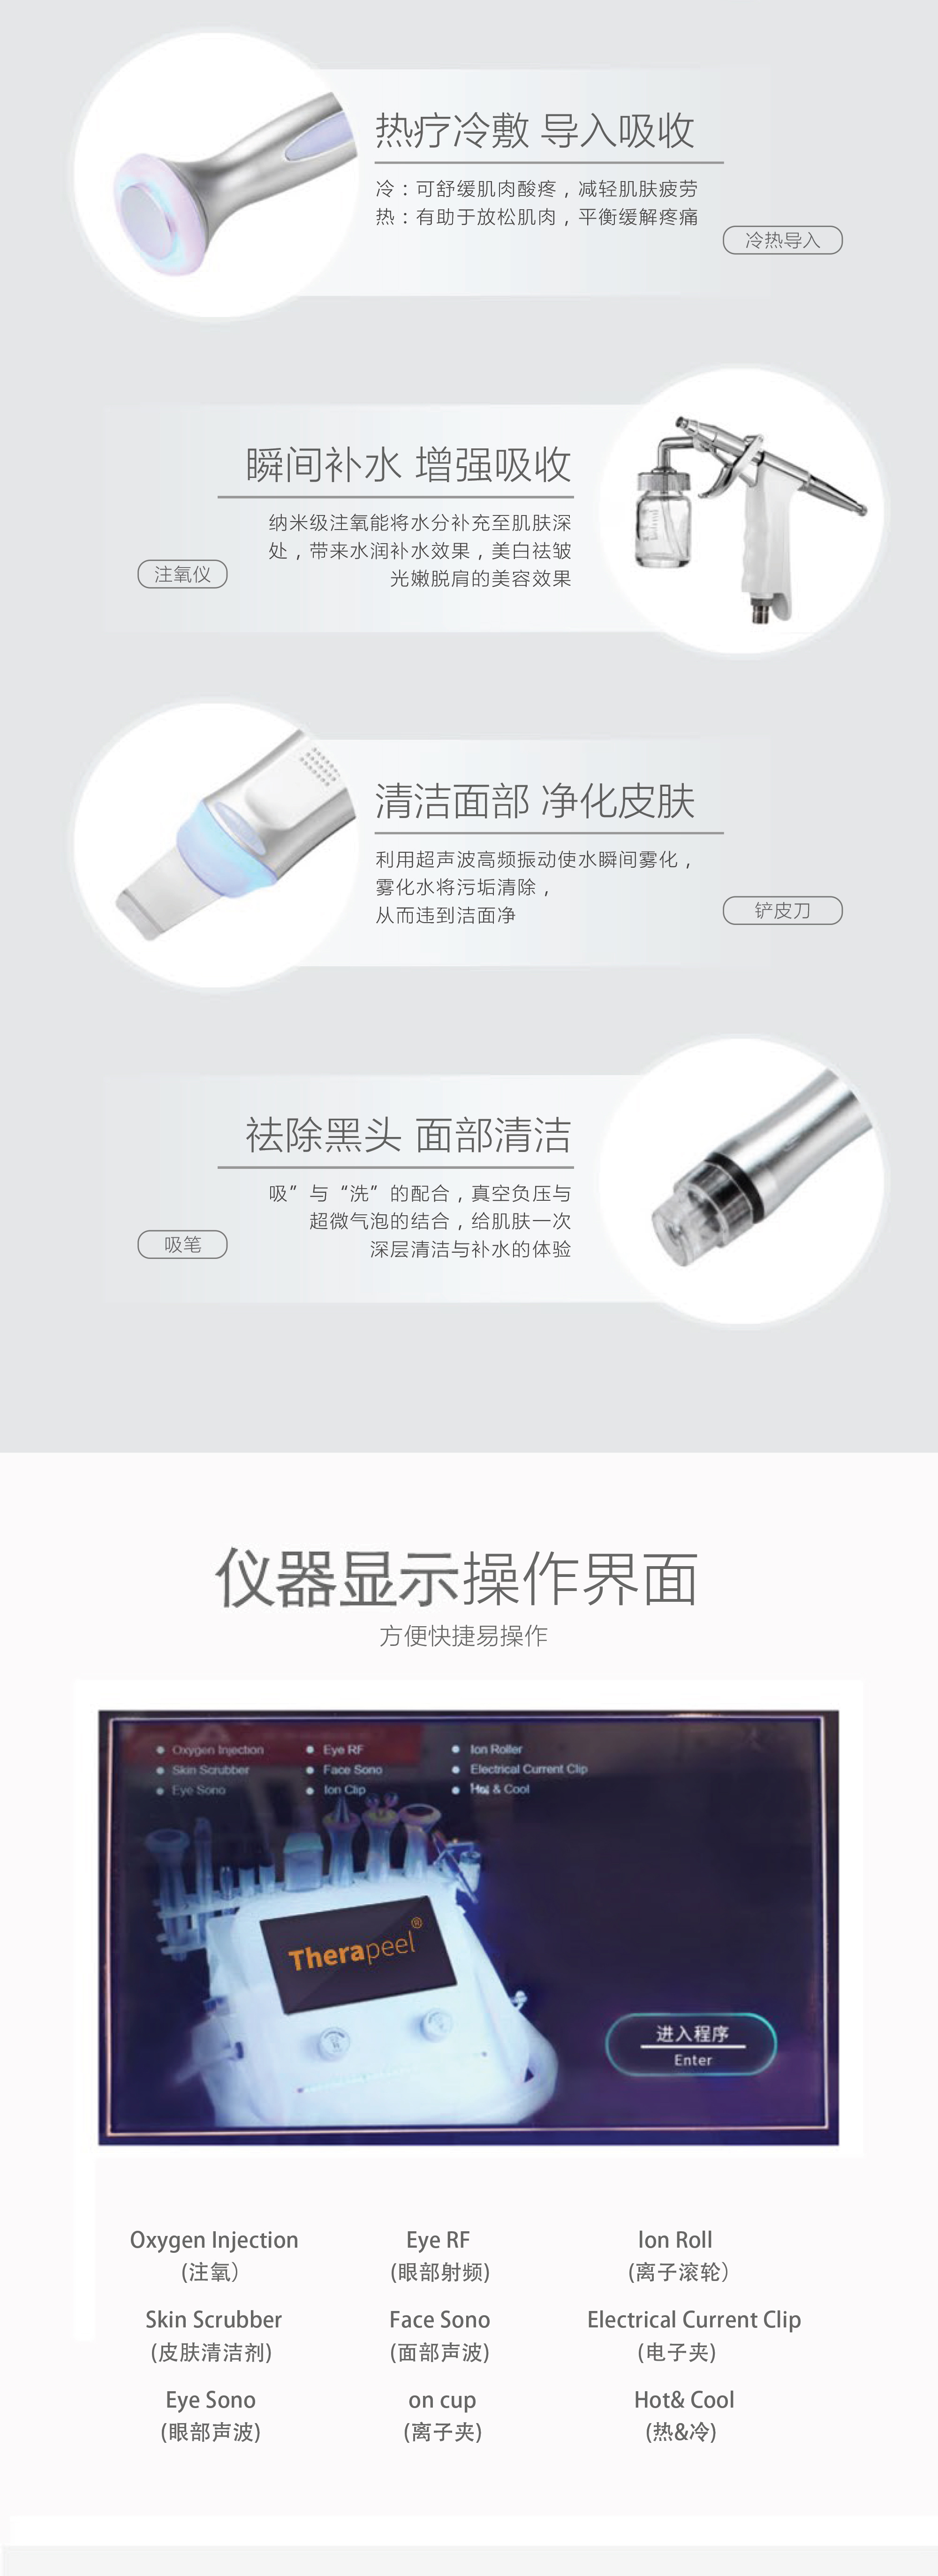 Therapeel Xiu Muning High Efficiency Synthesizer: -4